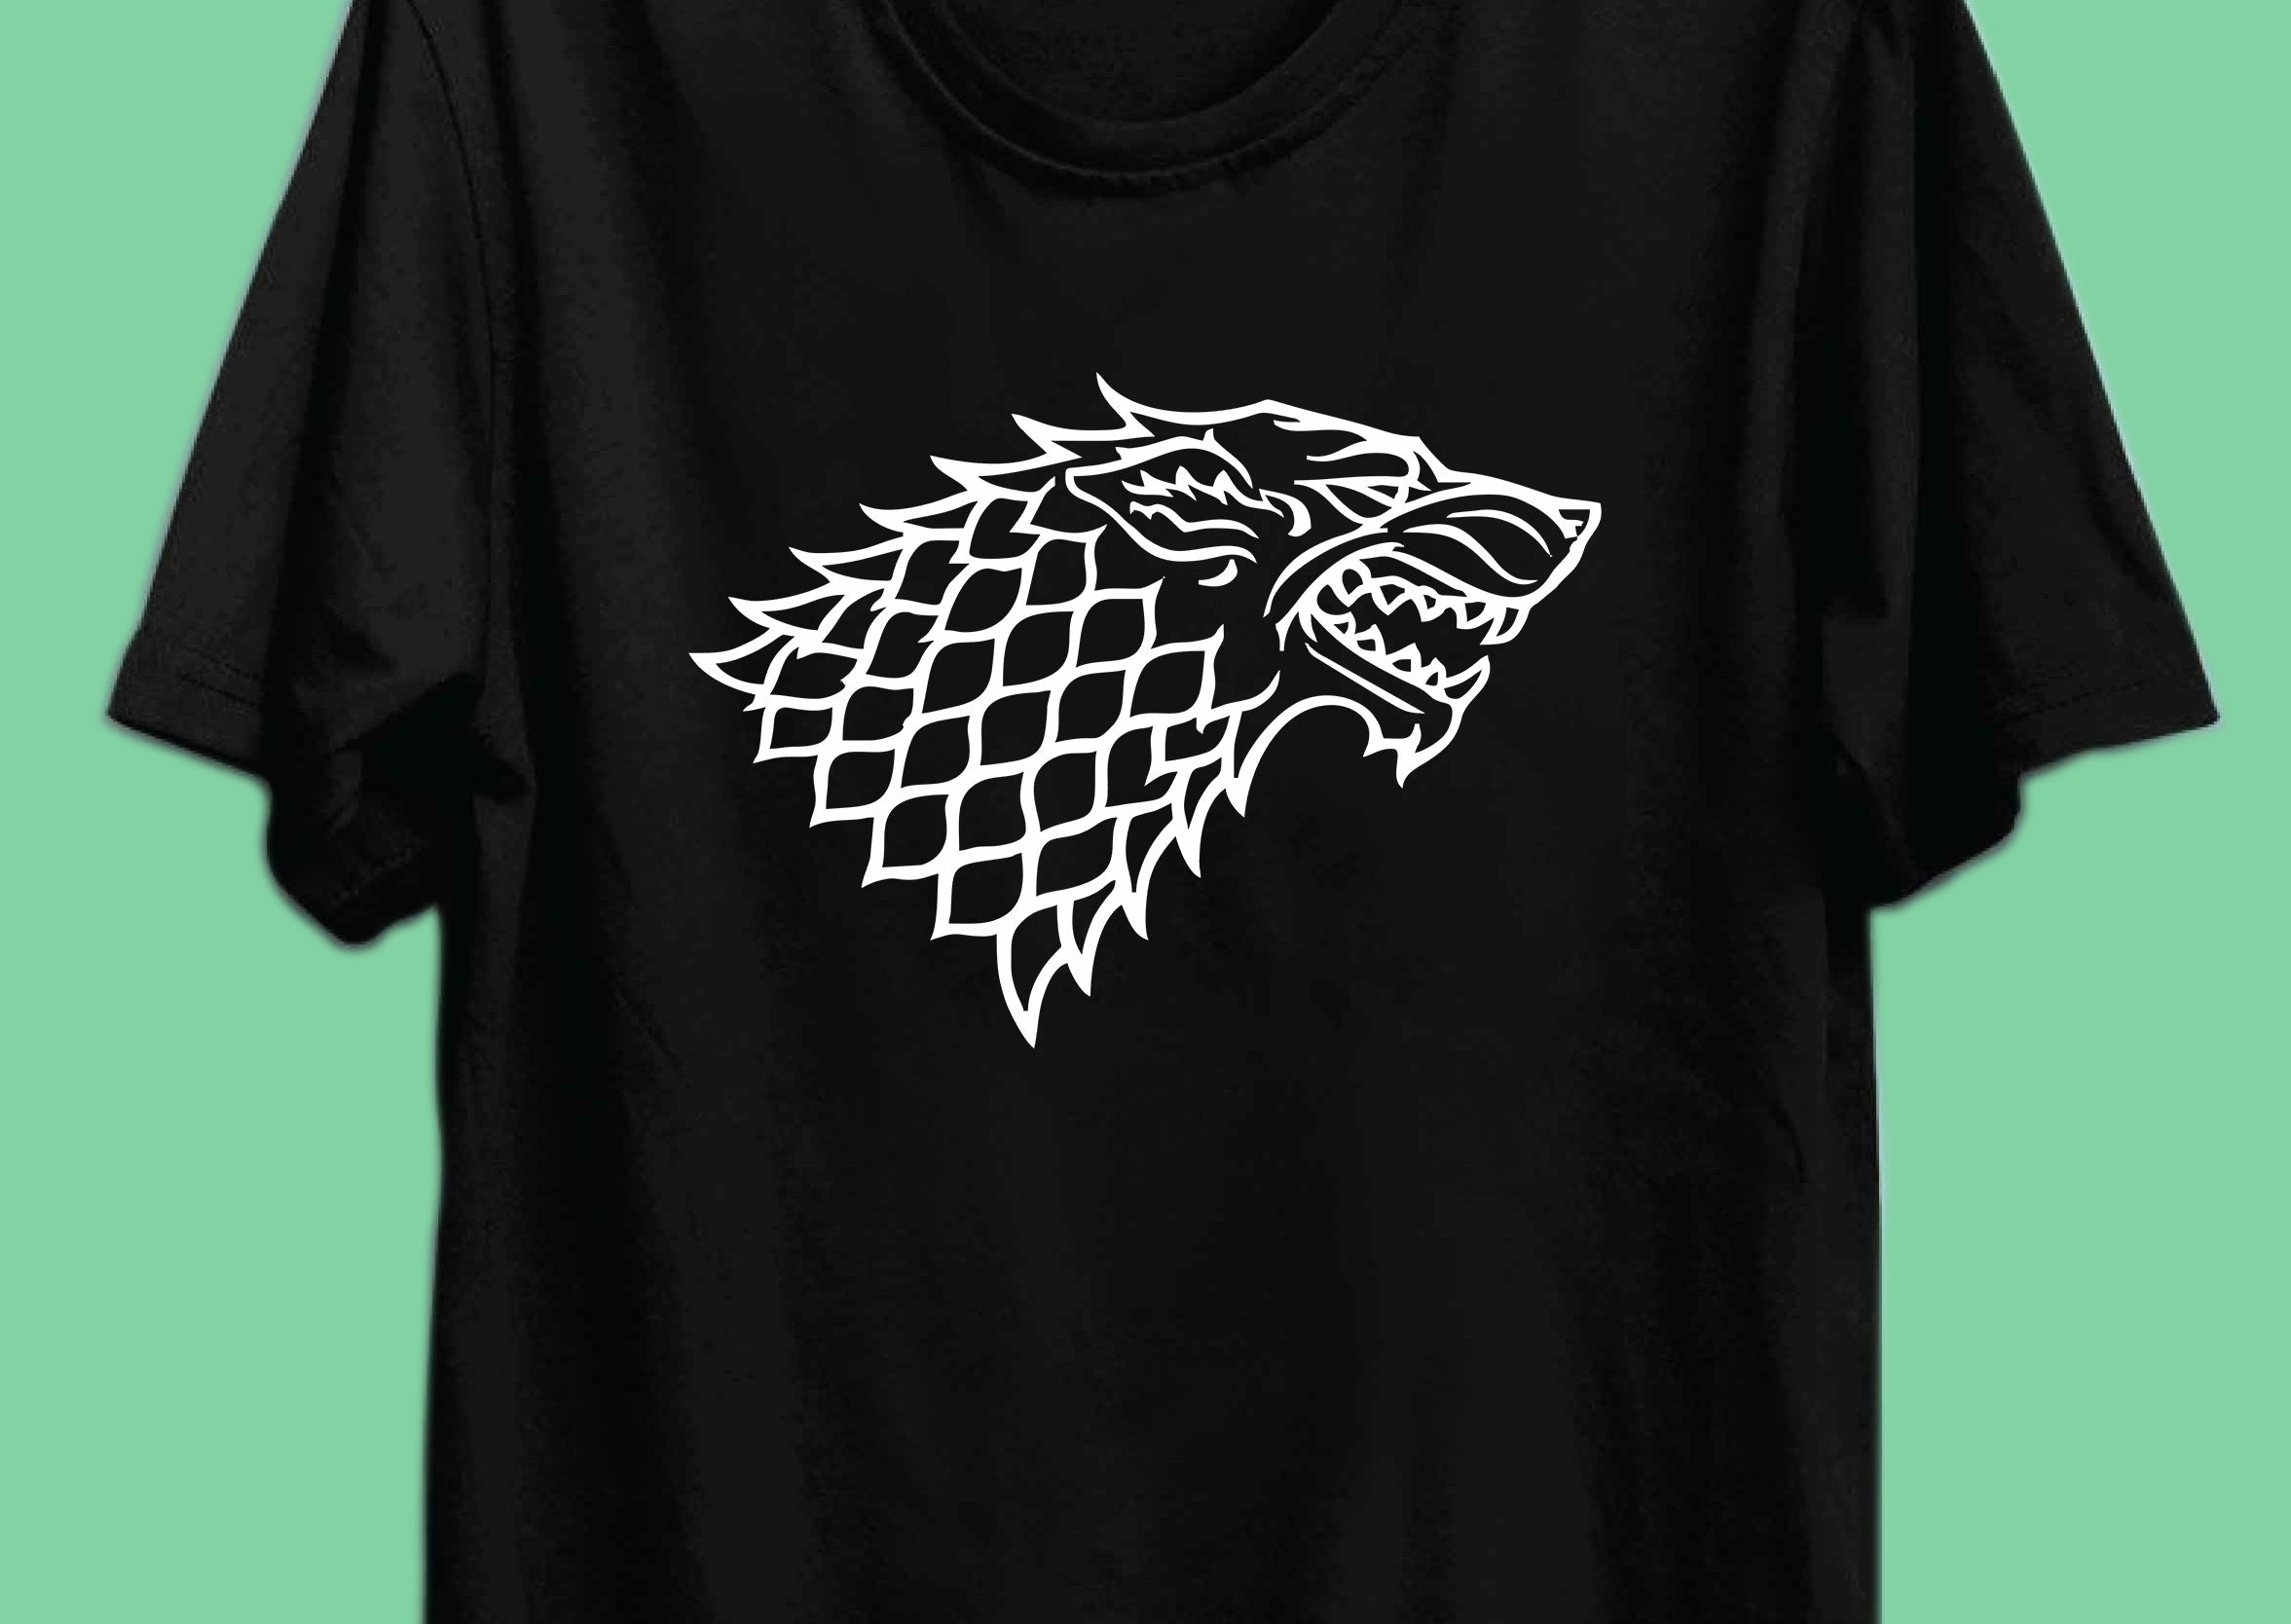 House Of Stark Reactr Tshirts For Men - Eyewearlabs